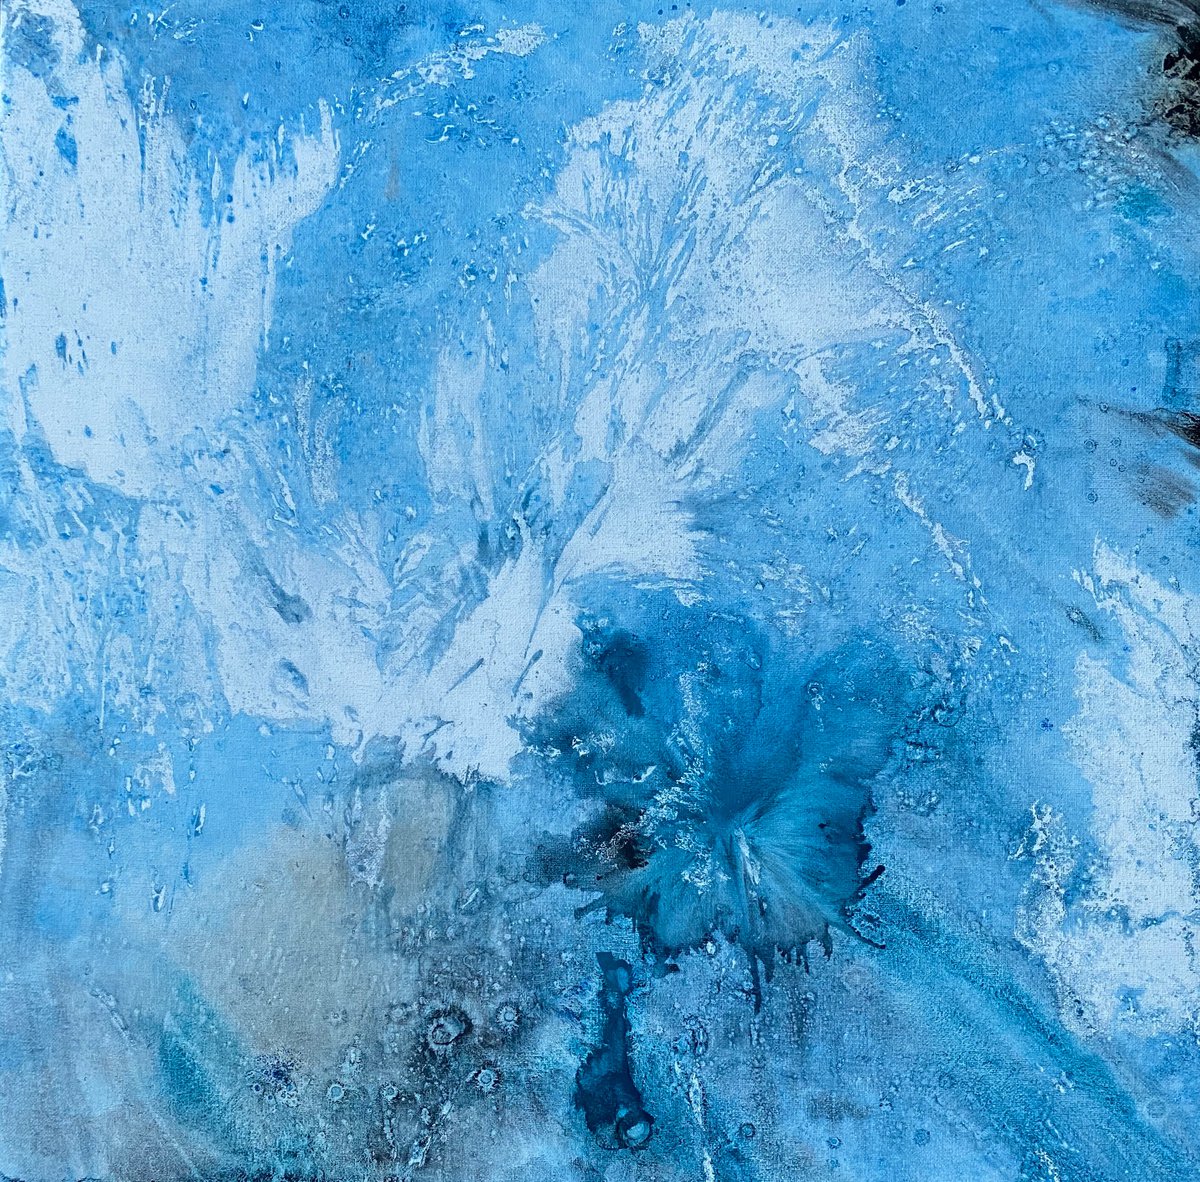 Blue abstract painting 2205202001 by Natalya Burgos